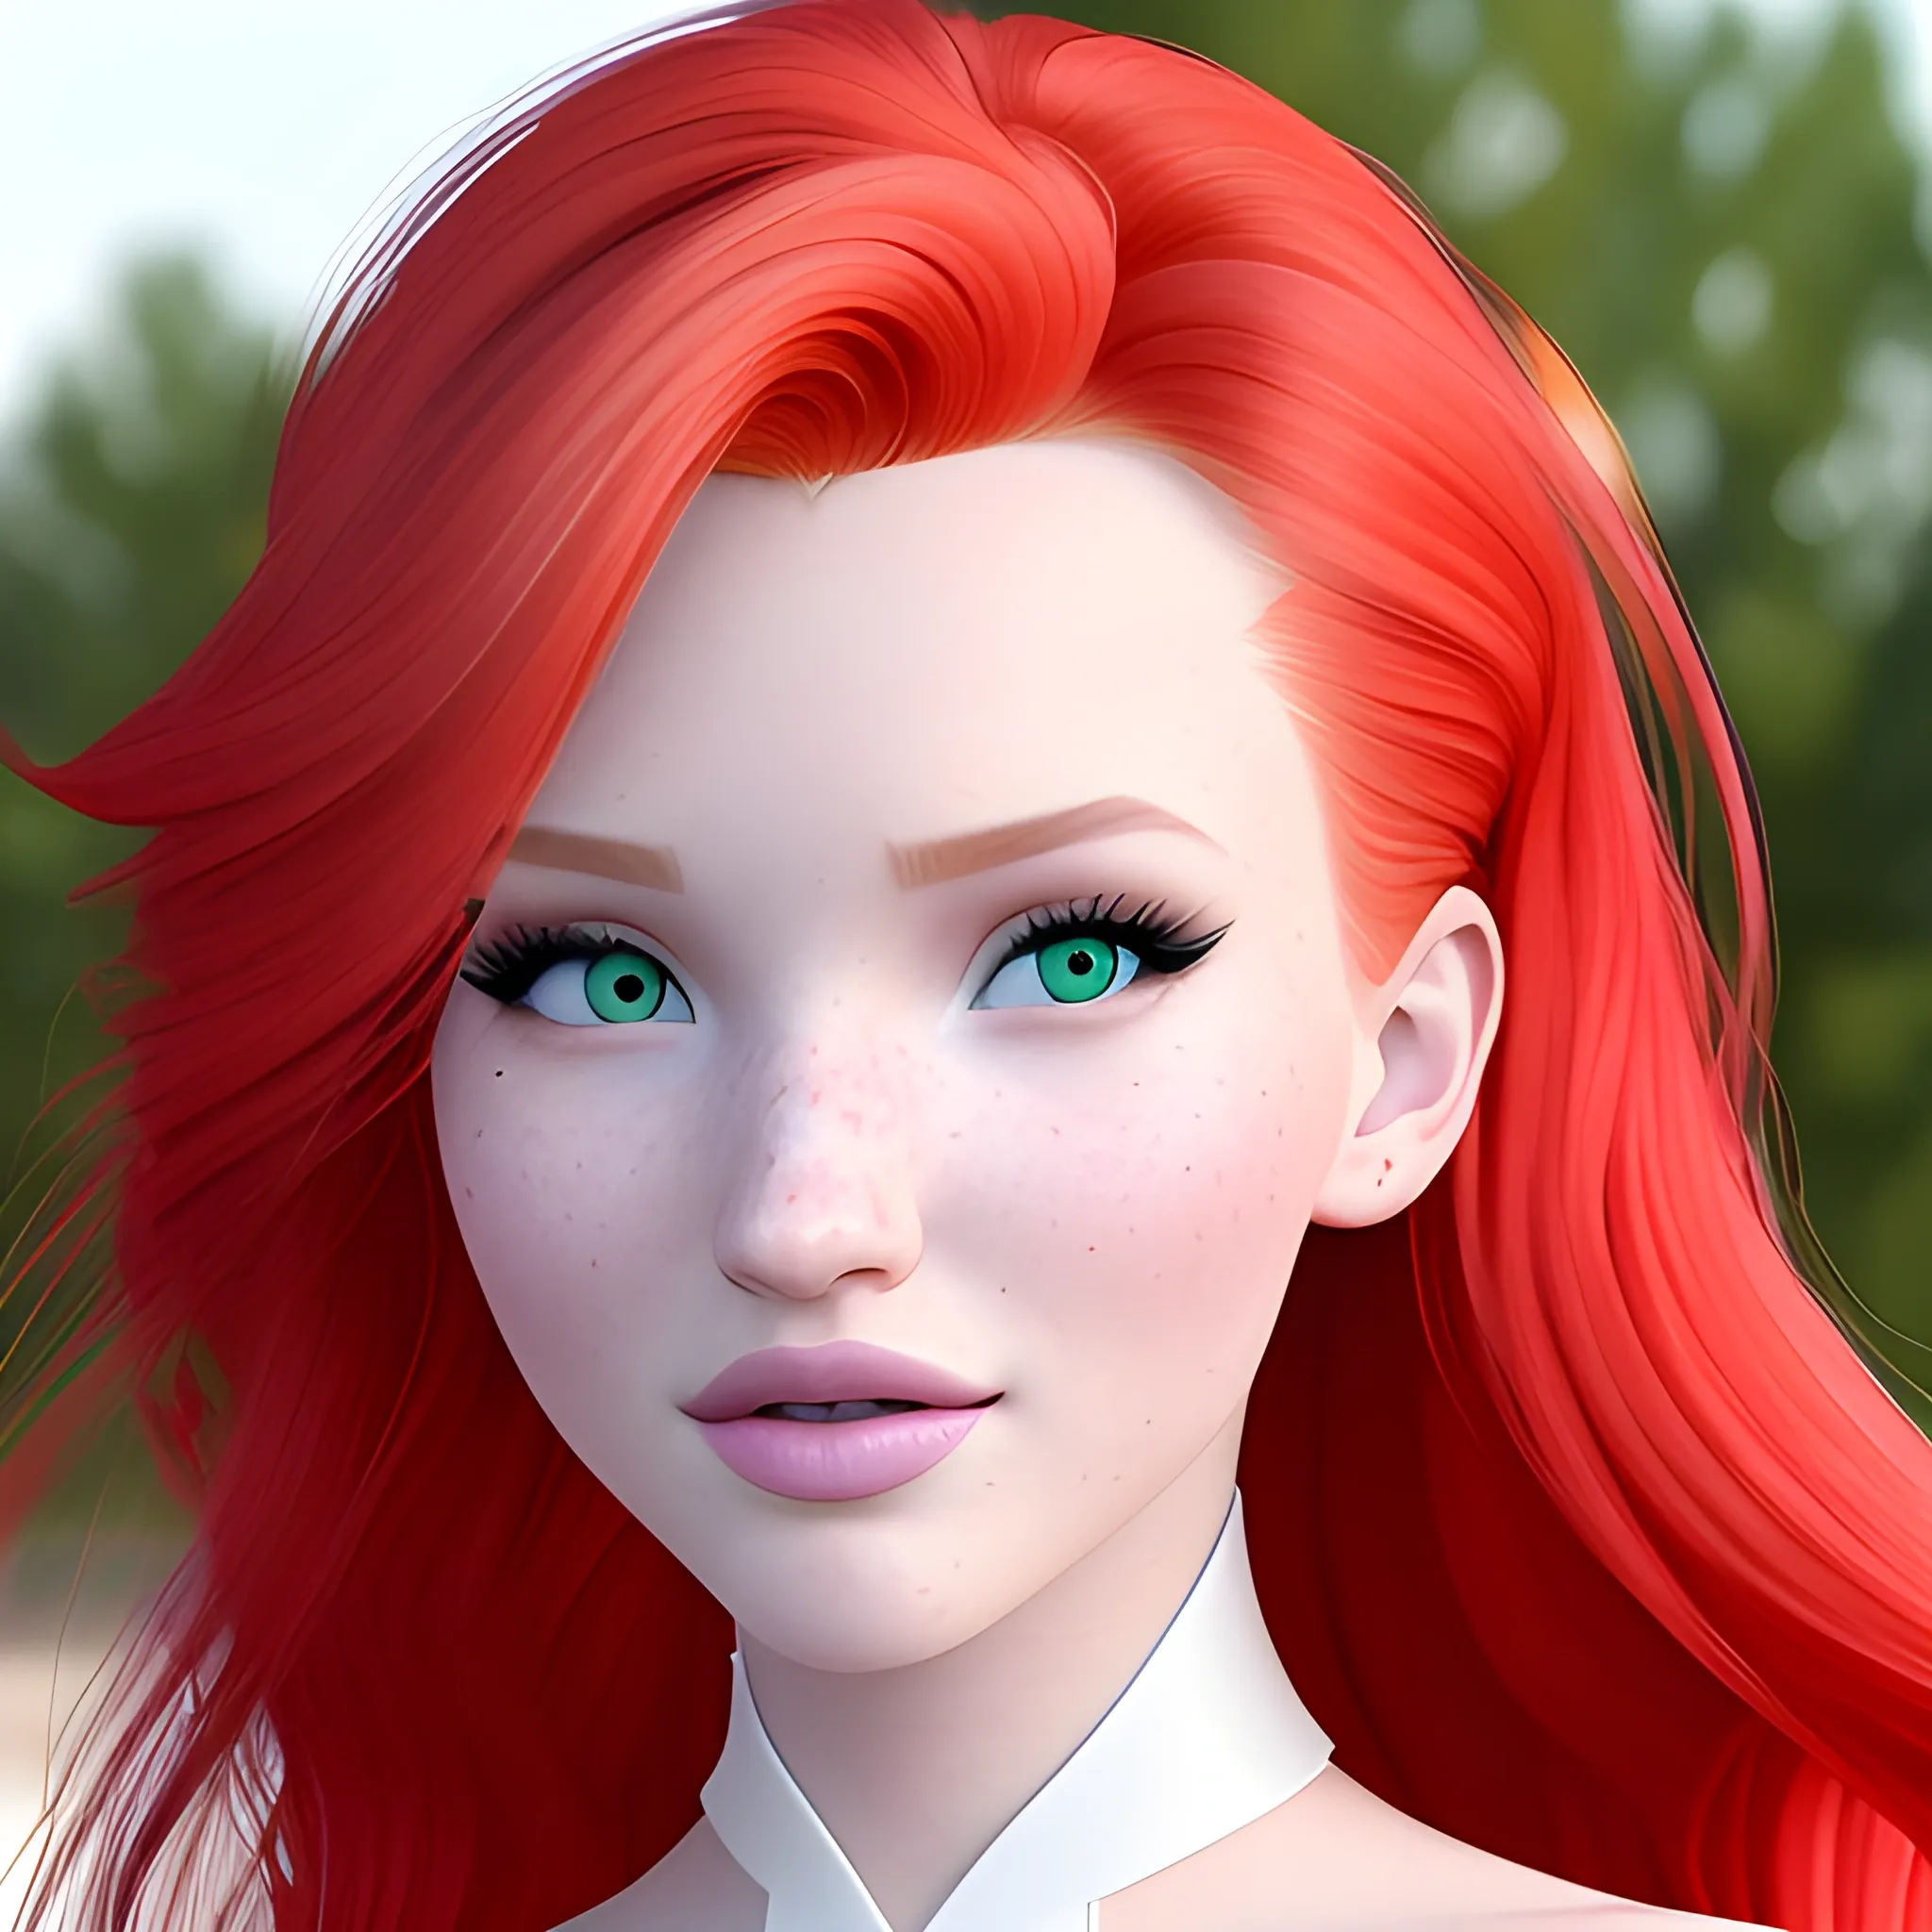 Bella Thorne / Dove Cameron / Elsa Hosk face morph, green eyes, red hair, 3D